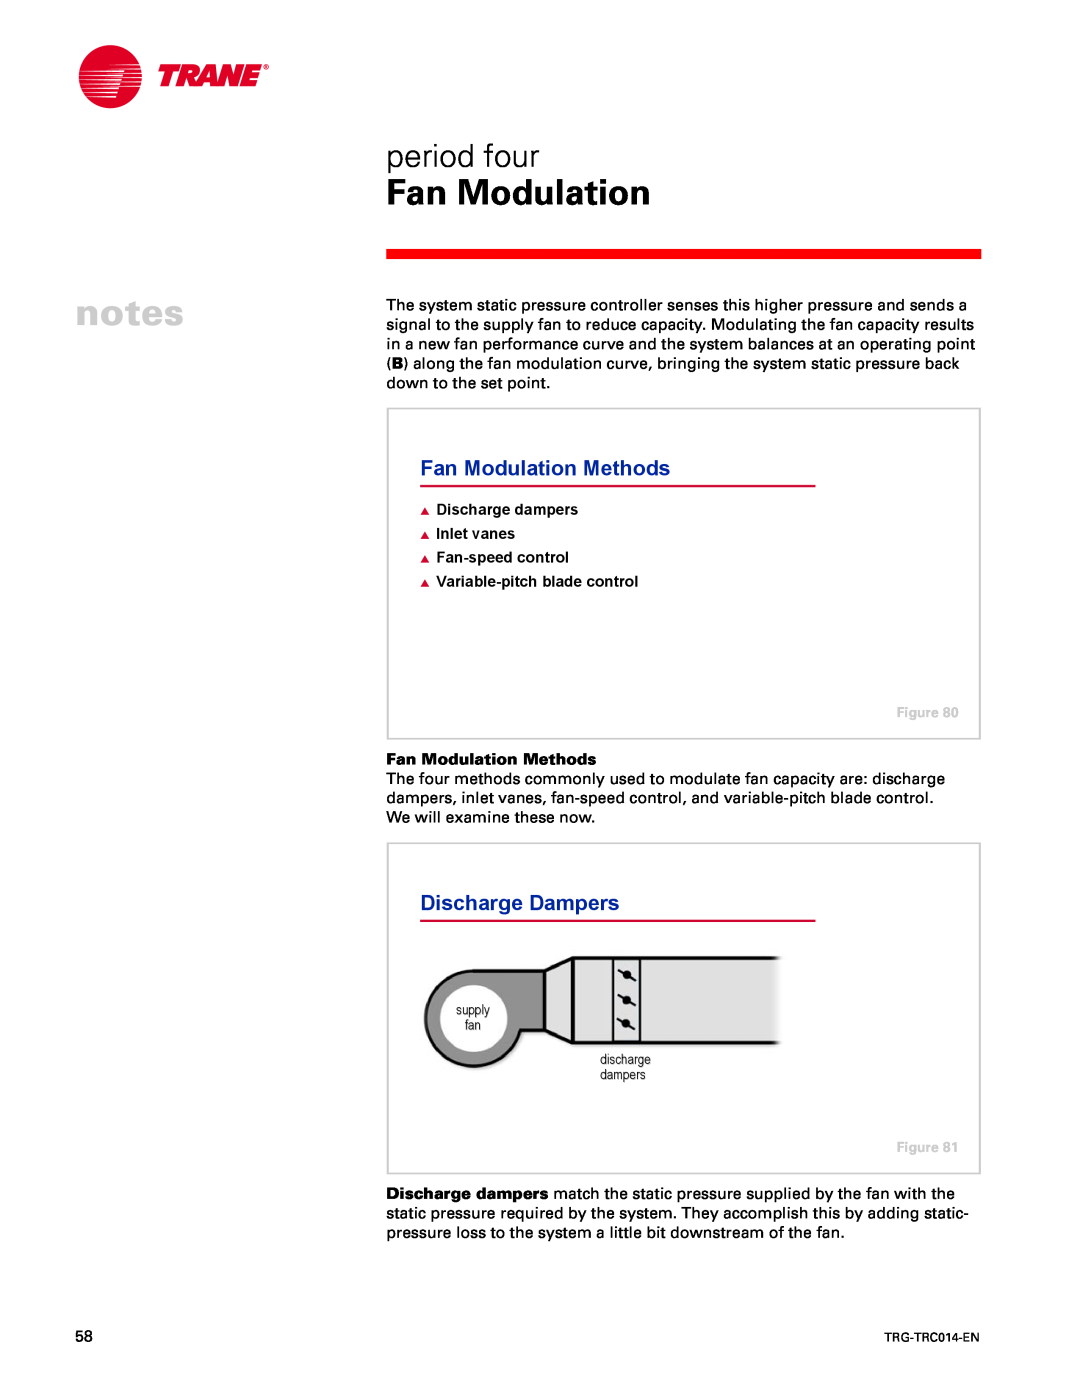 Trane TRG-TRC014-EN manual Fan Modulation Methods, Discharge Dampers, period four 